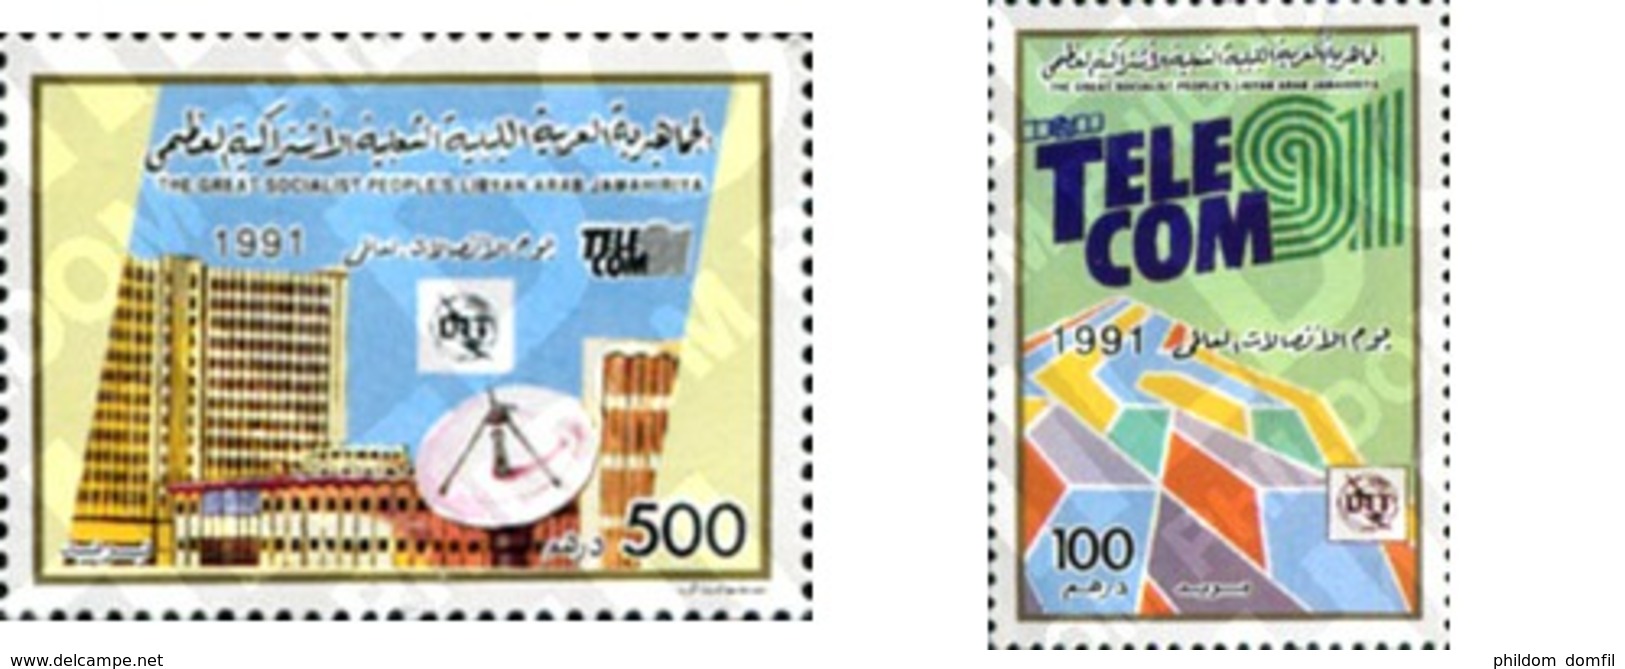 Ref. 339034 * MNH * - LIBYA. 1991. TELECOM-91 . TELECOM-91 - Libya